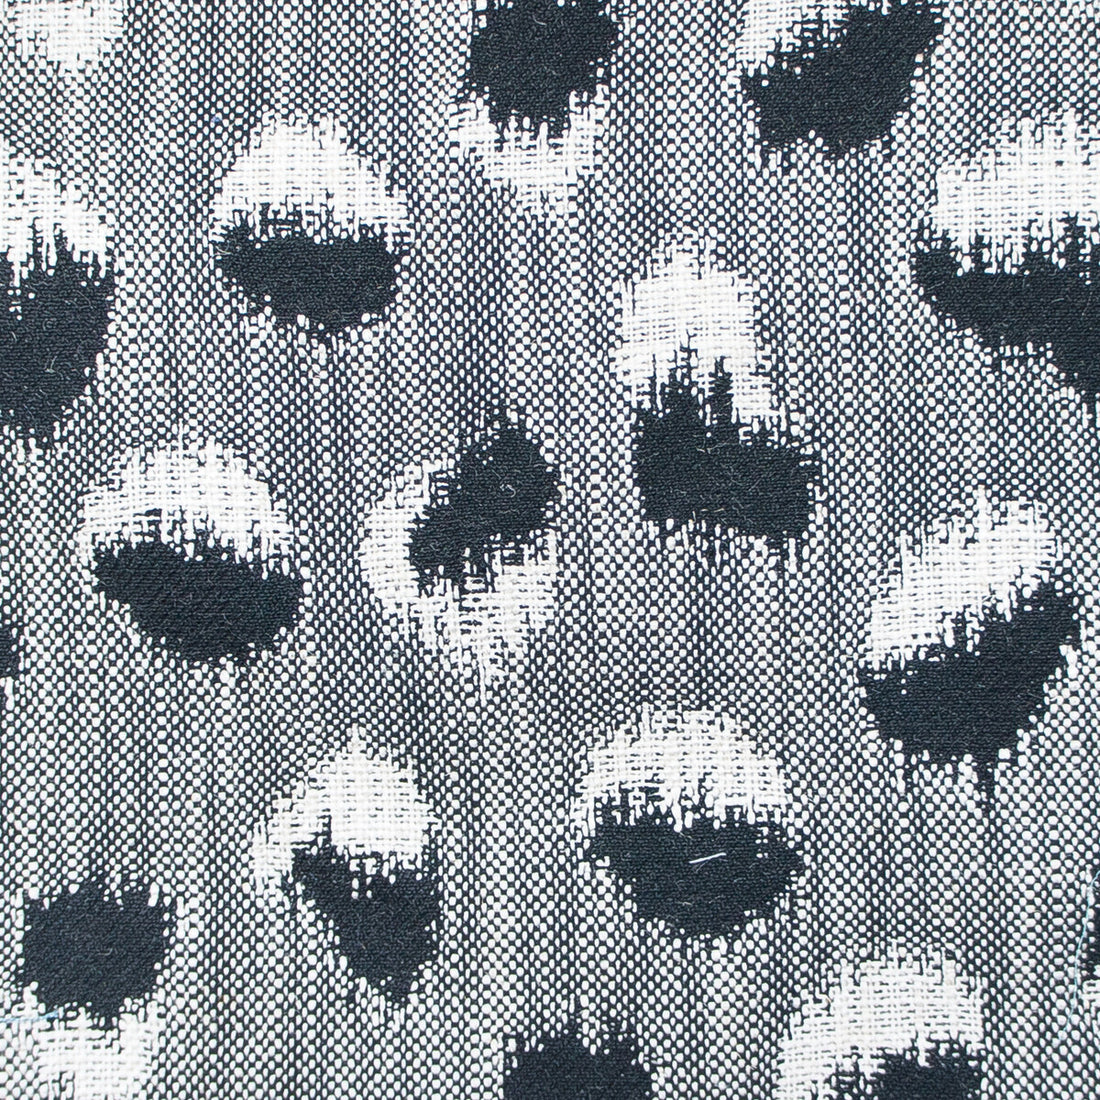 Castilla fabric in black color - pattern GDT5569.005.0 - by Gaston y Daniela in the Gaston Nuevo Mundo collection